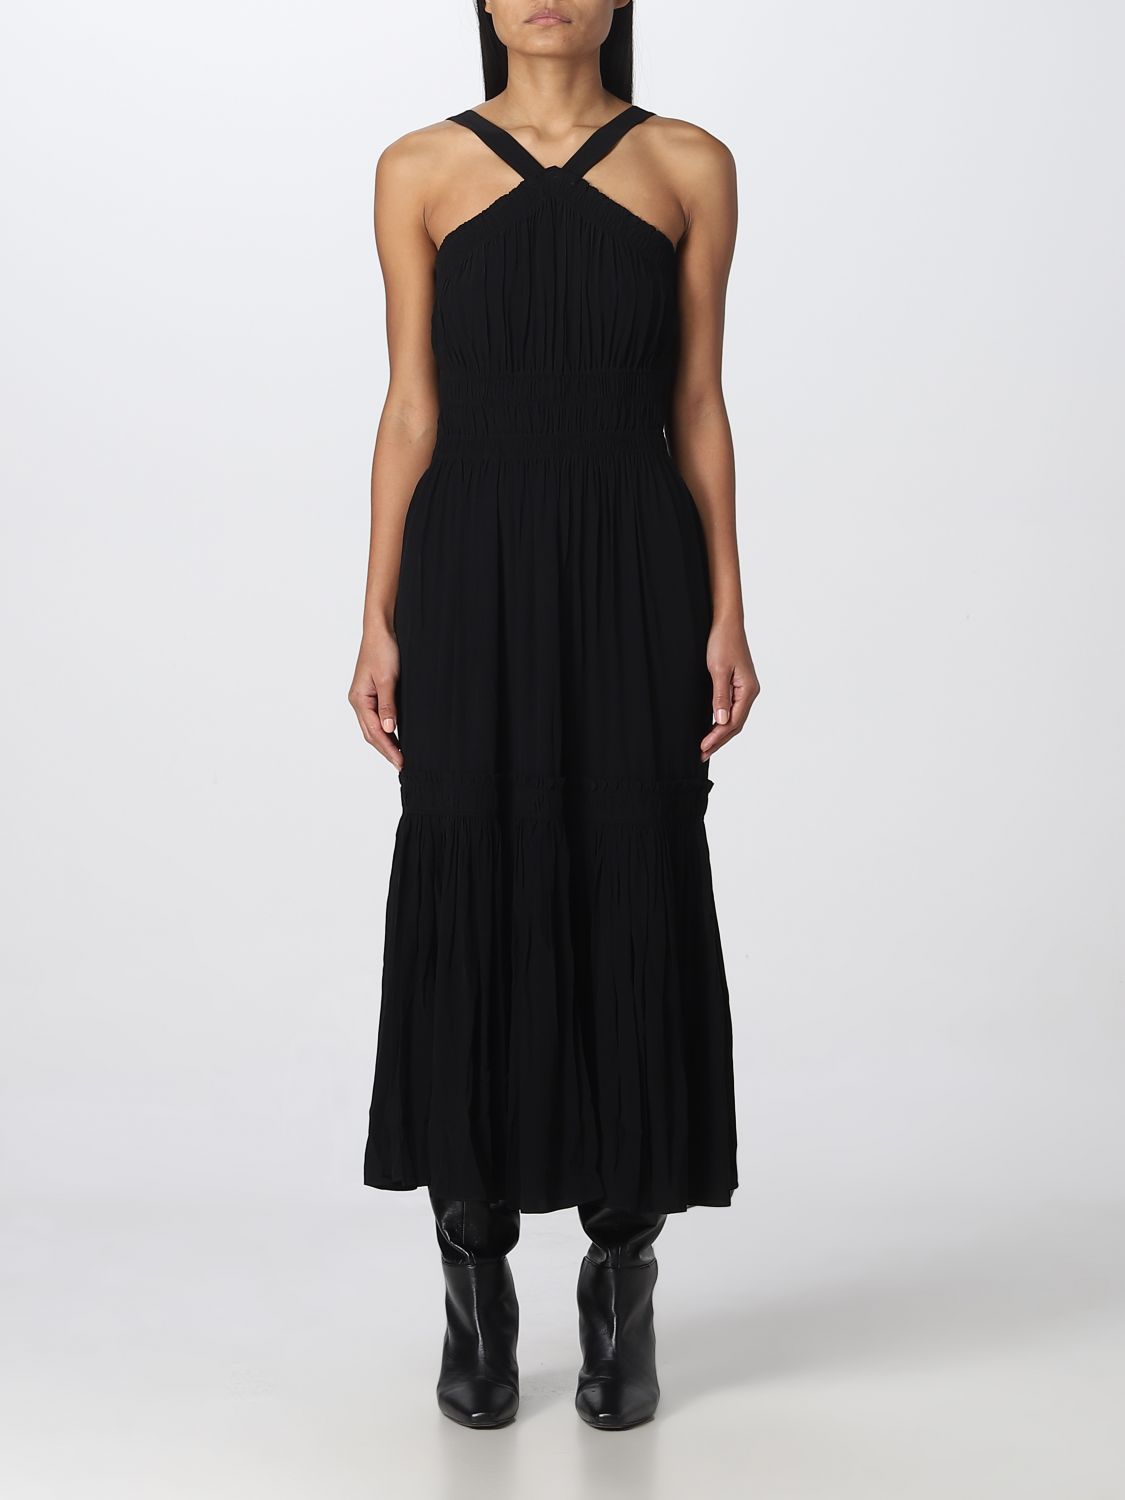 PROENZA SCHOULER: dress for woman - Black | Proenza Schouler dress ...